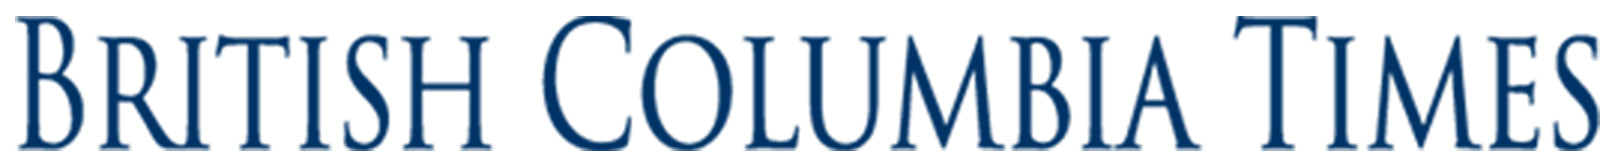 Sylvi Watch Brand Featured in British_Columbia_Times - Logo